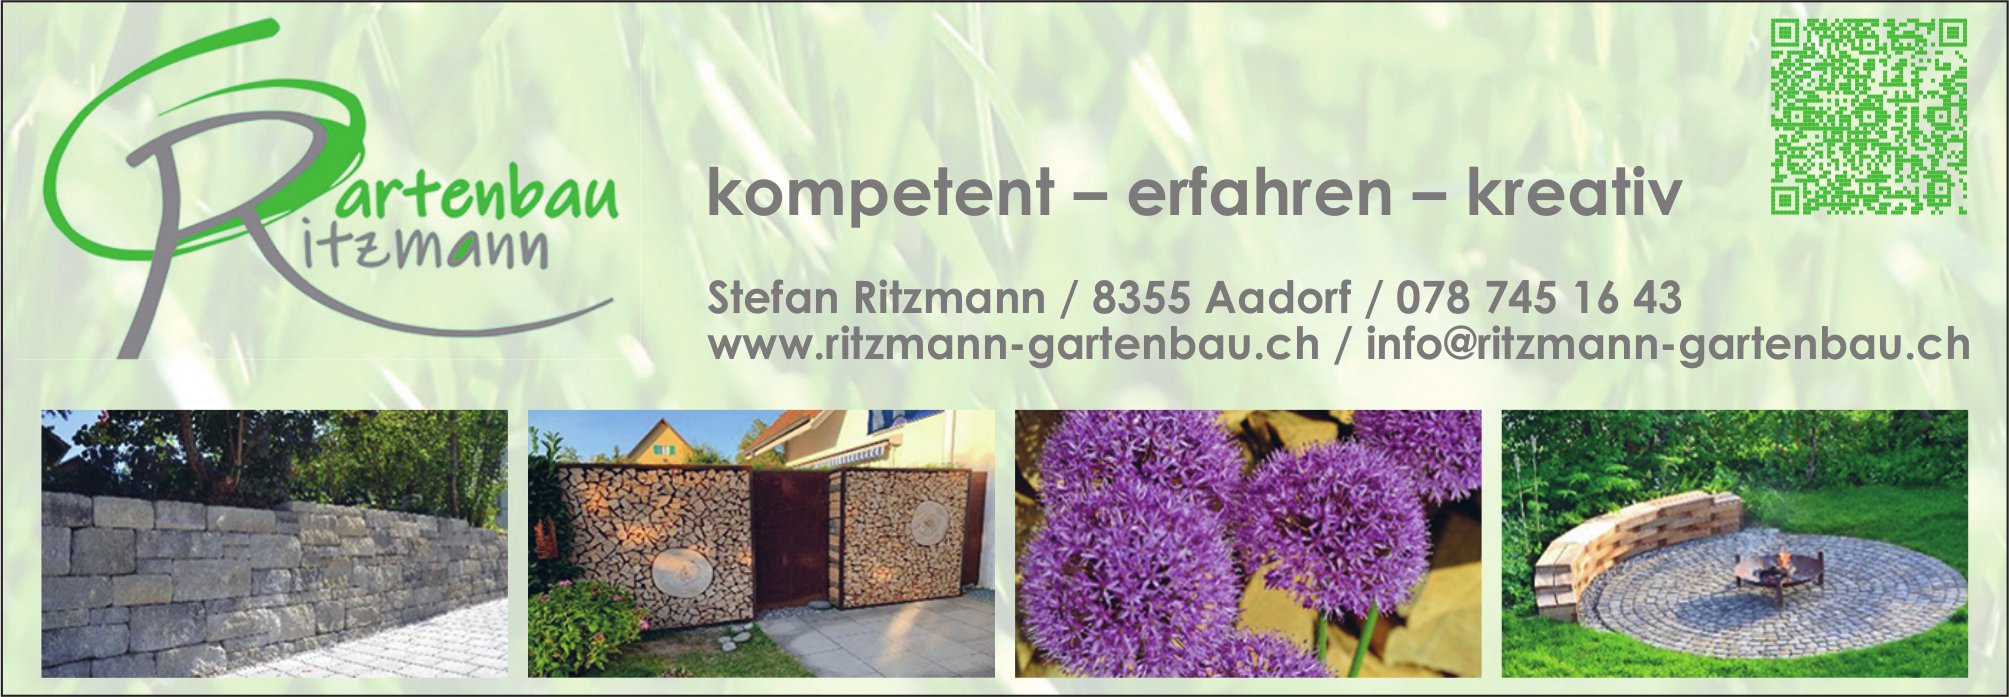 Gartenbau Ritzmann, Aadorf - kompetent – erfahren – kreativ